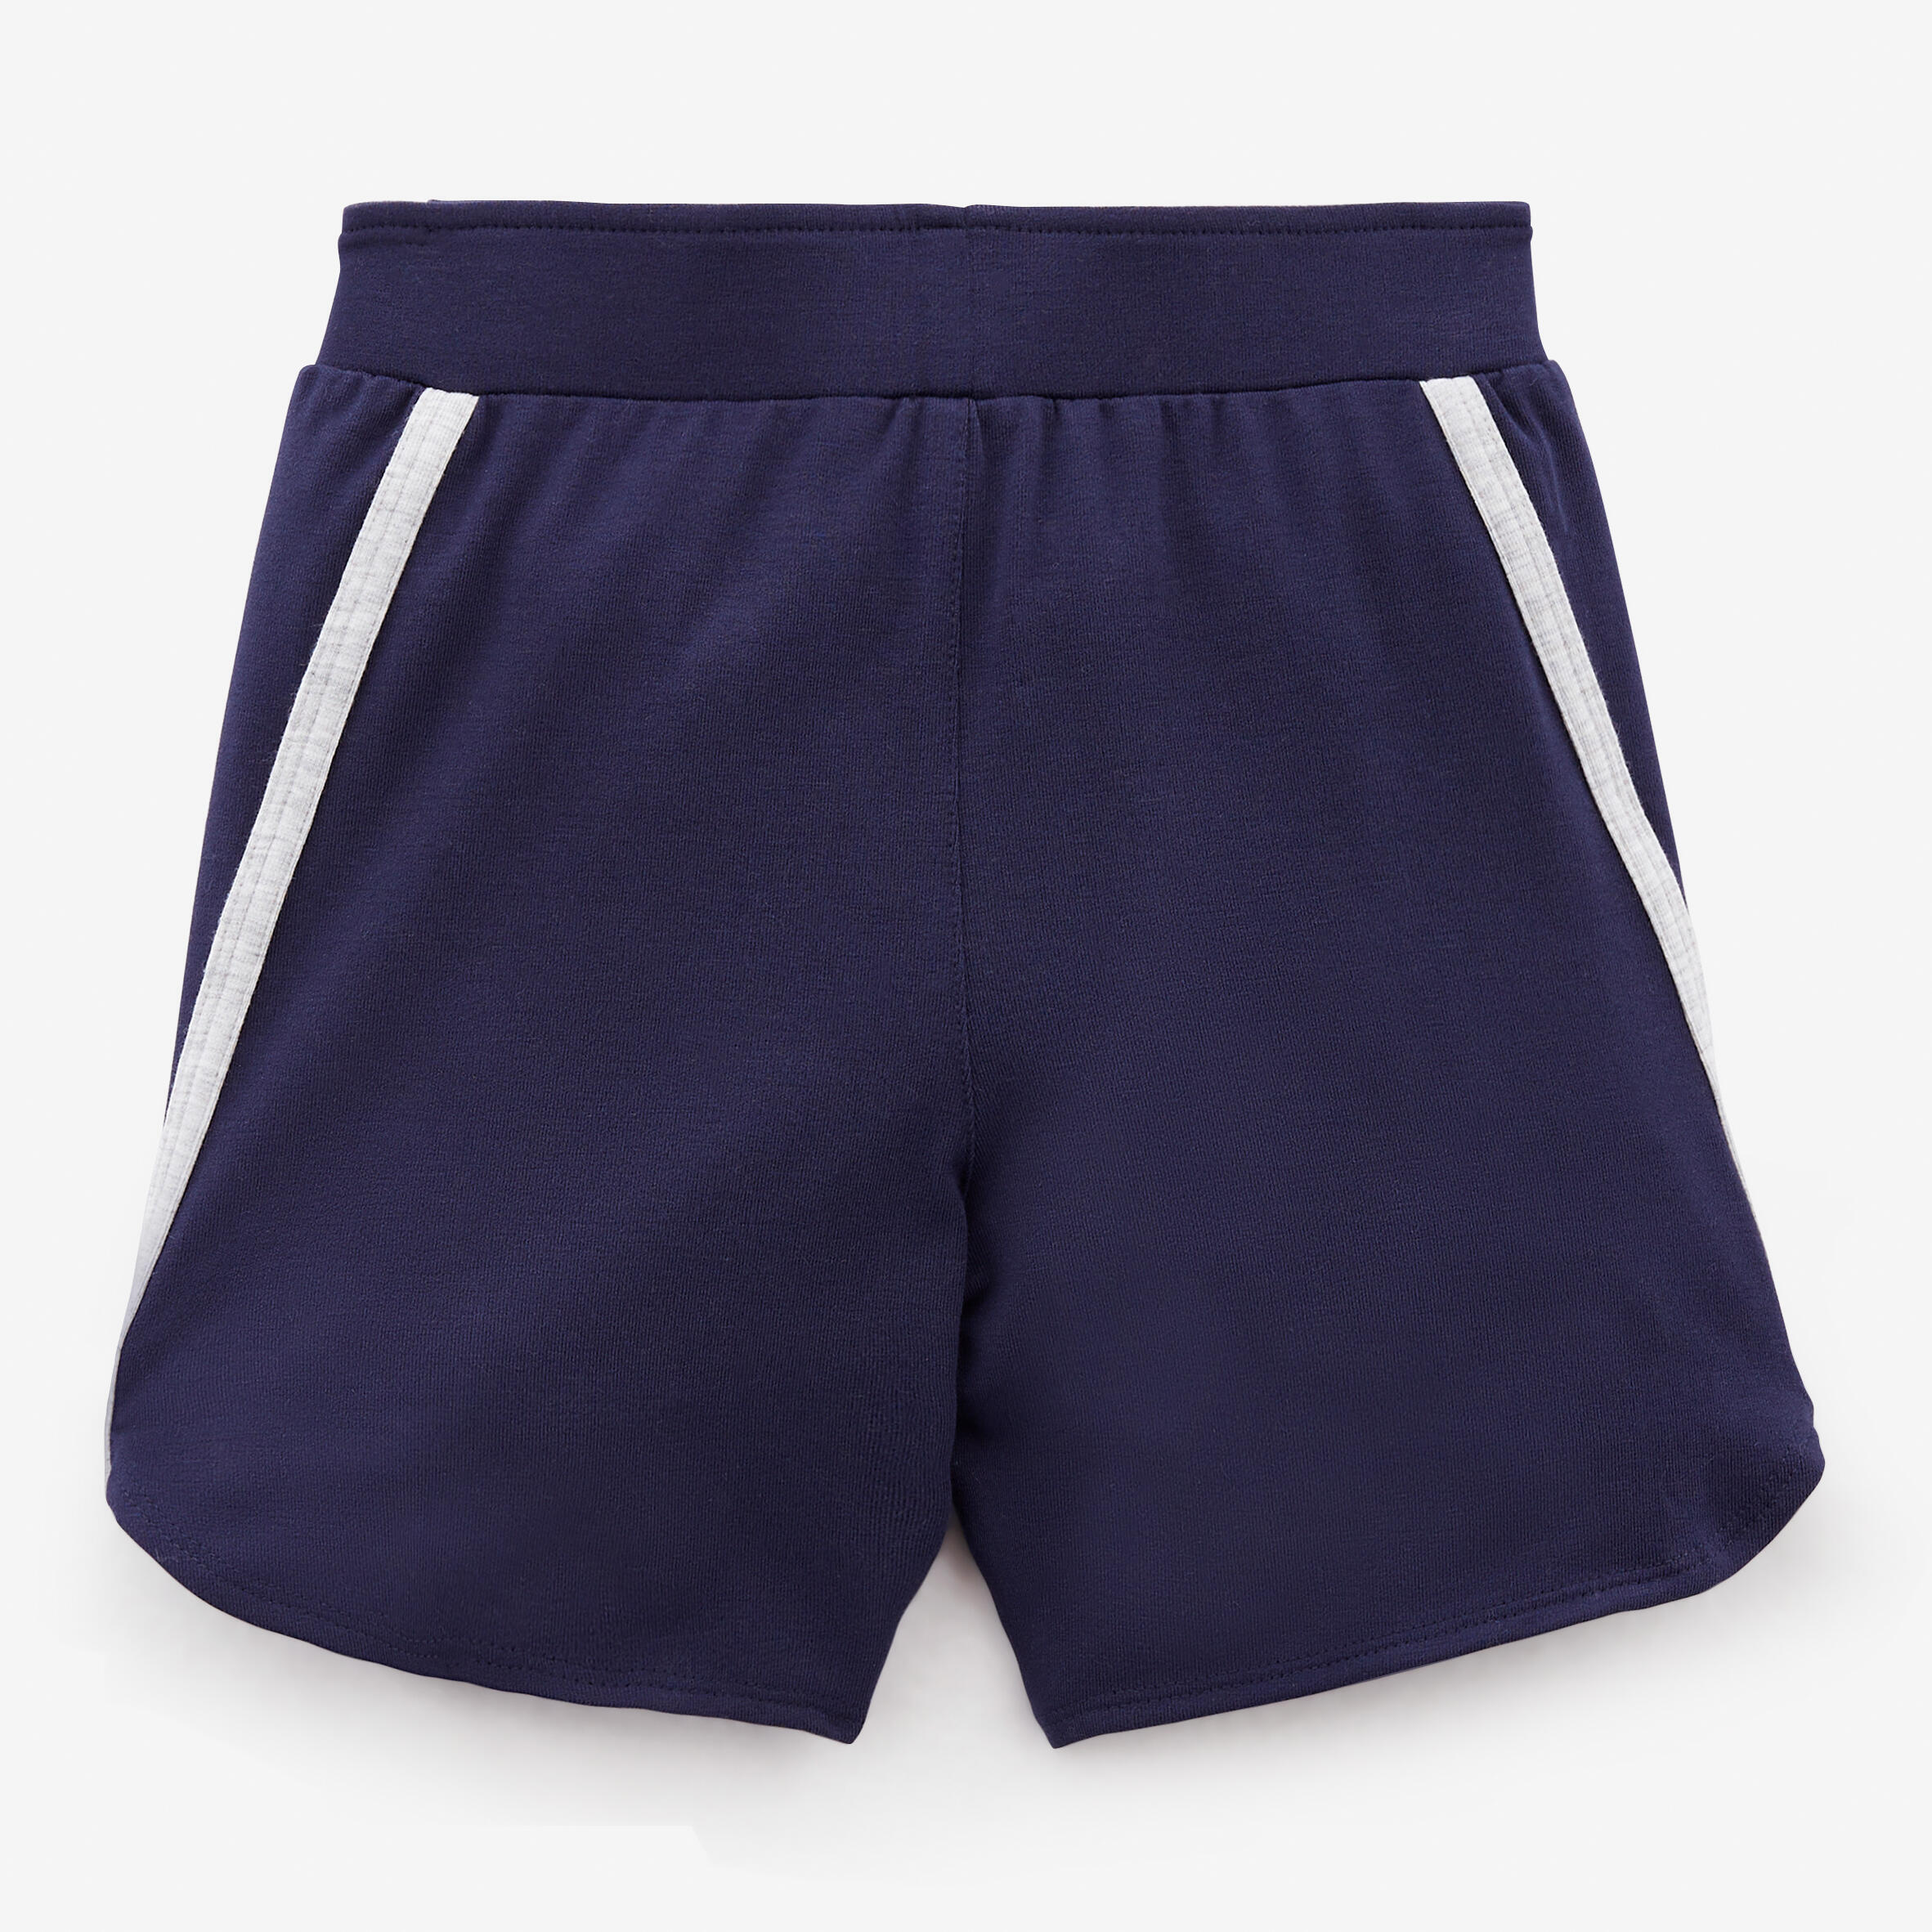 Kids' Breathable Adjustable Shorts 500 - Navy Blue 3/4